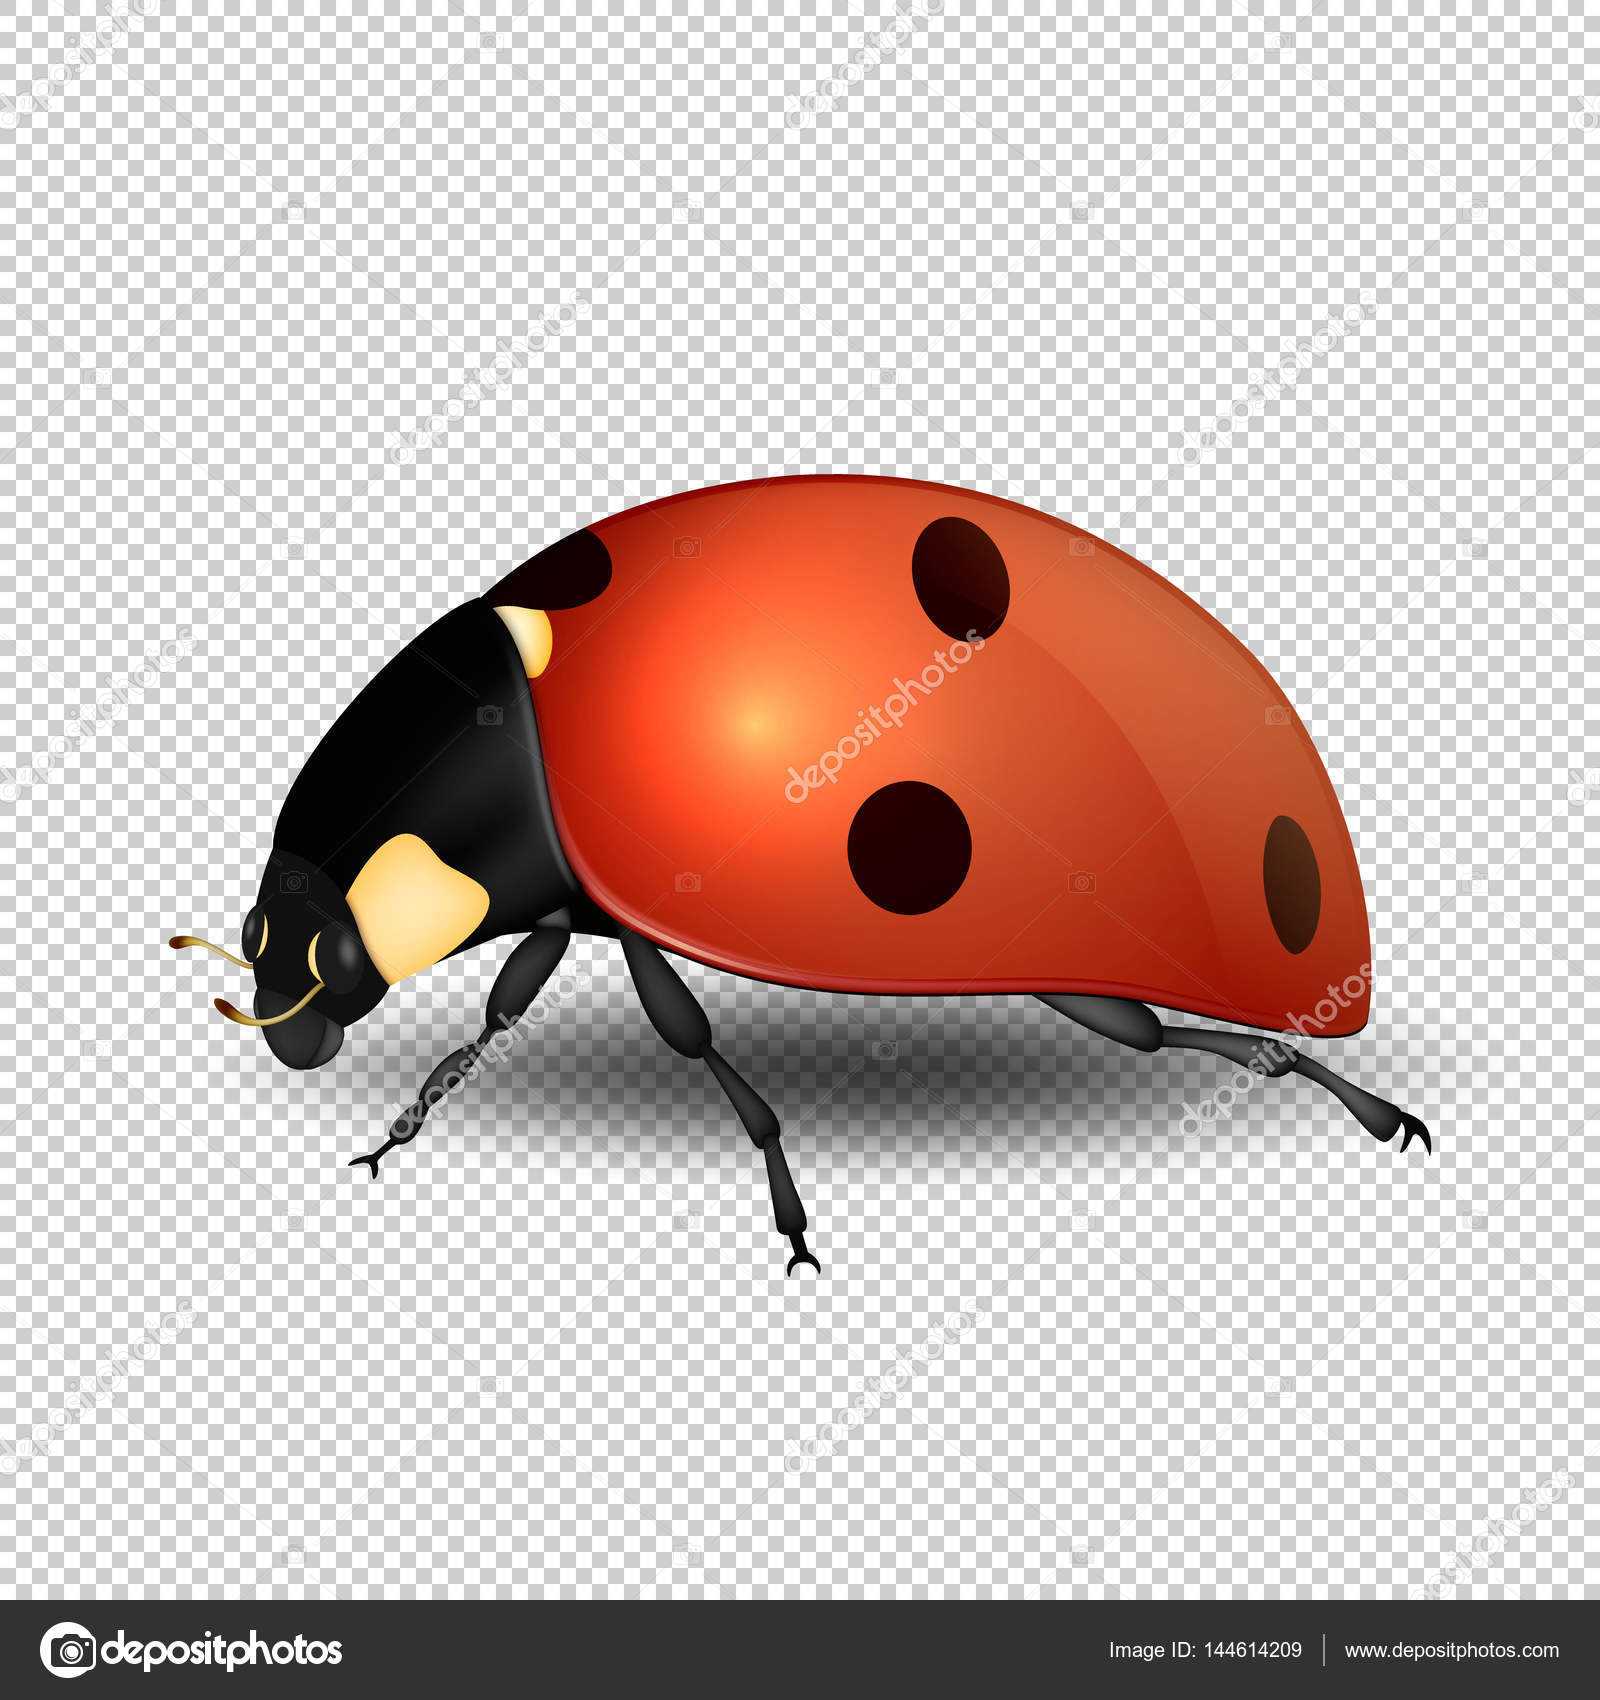 Blank Ladybug Template | Vector Close Up Realistic Ladybug With Blank Ladybug Template